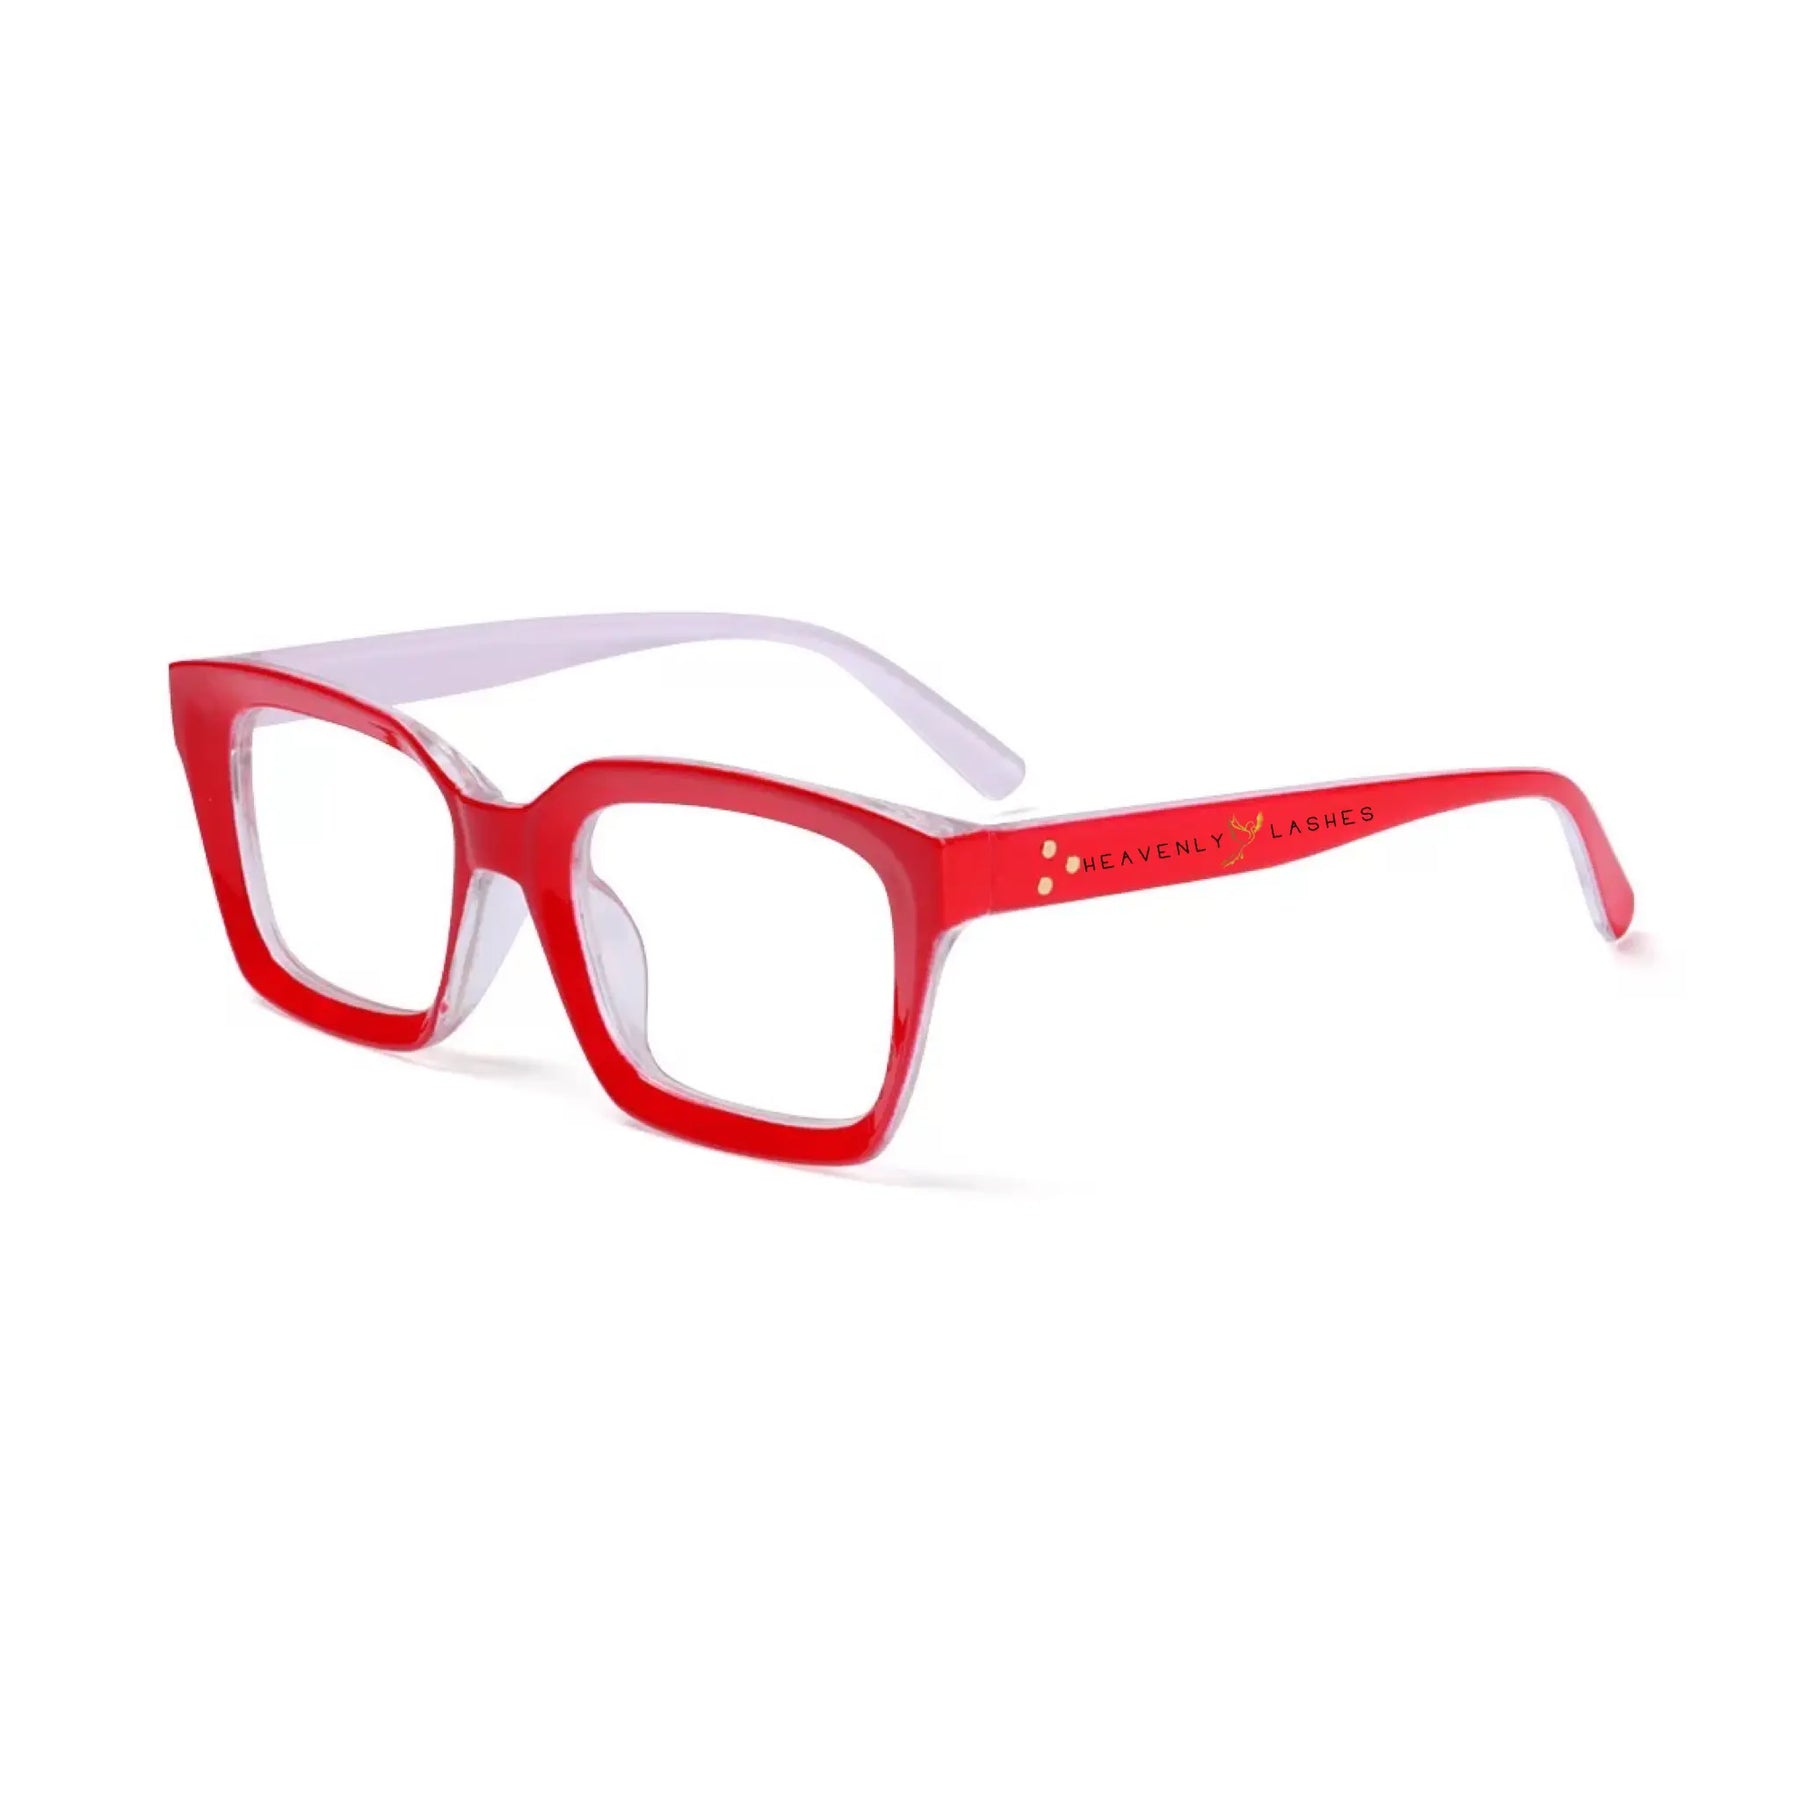 Bella Lash - Magnification Glasses